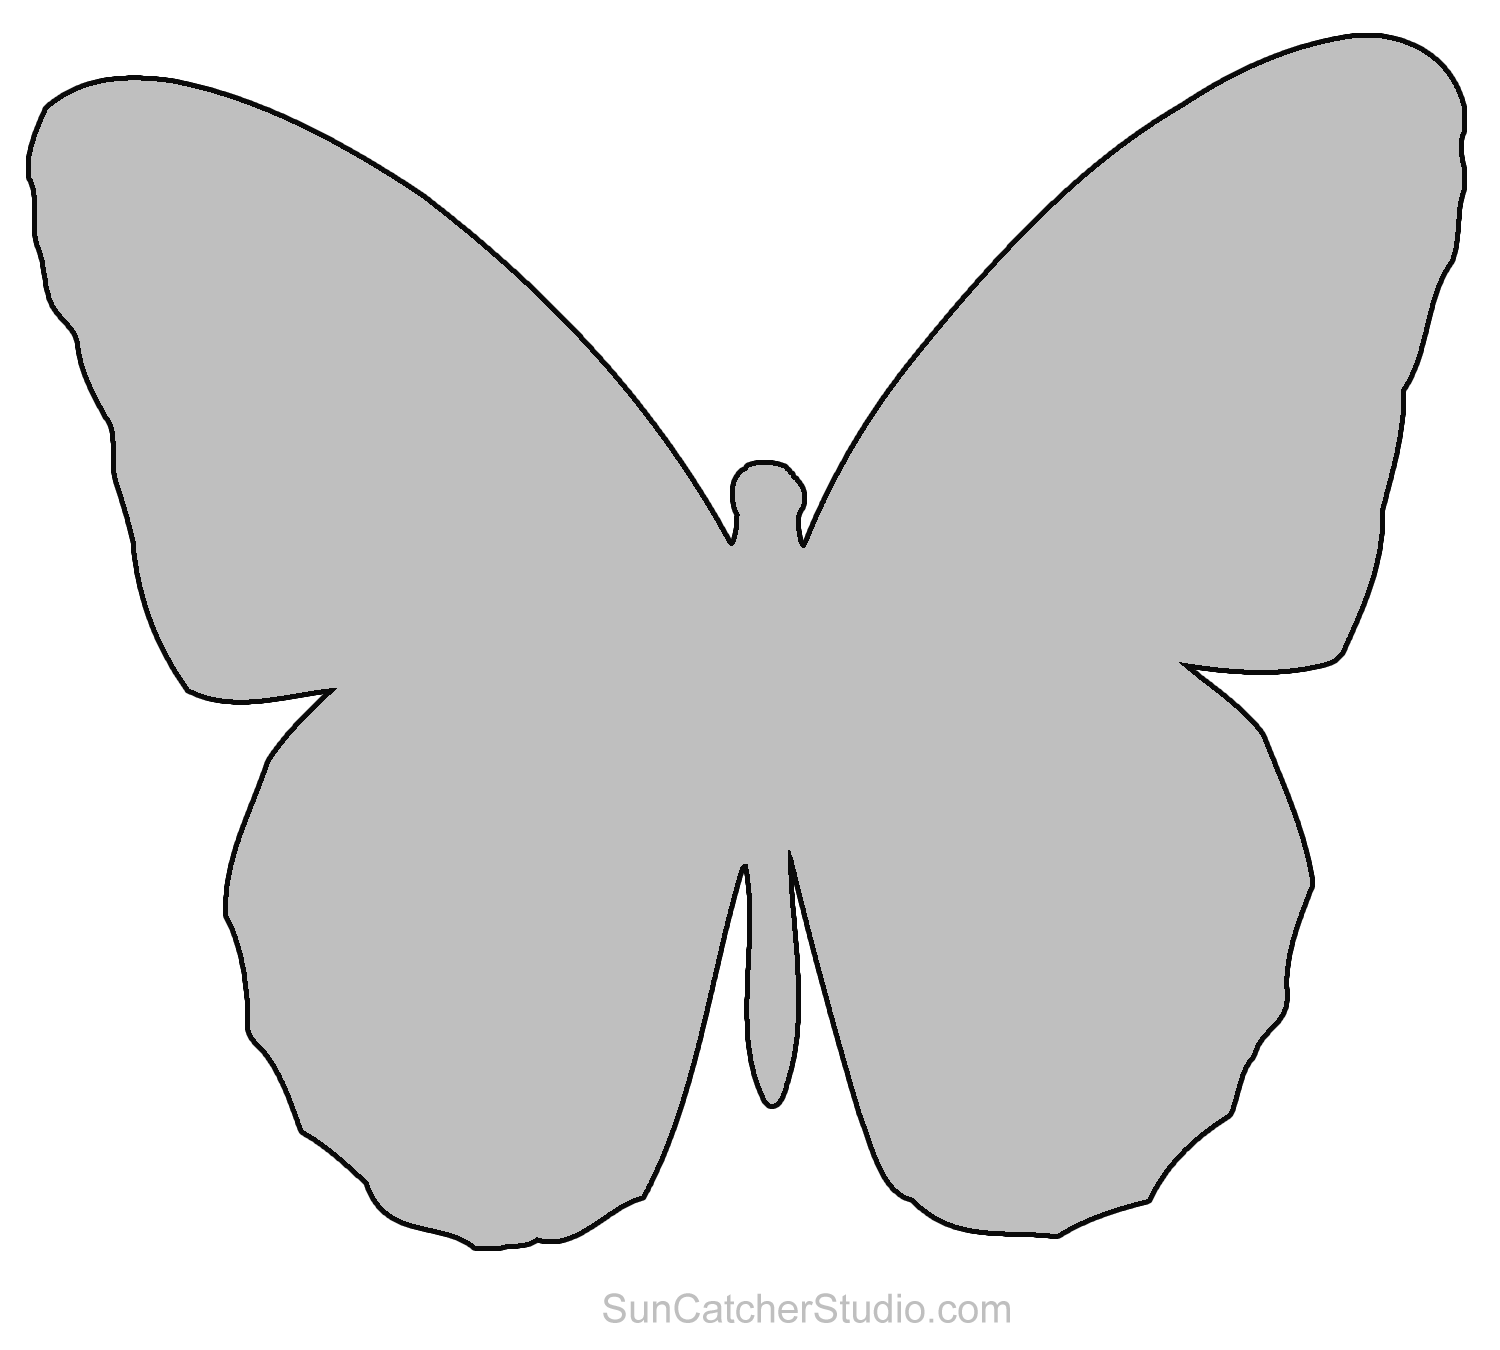 Butterfly Pattern Png 1 500 1 350 Pixels Ideen Fur Die Schule Holzdeko Vorlagen